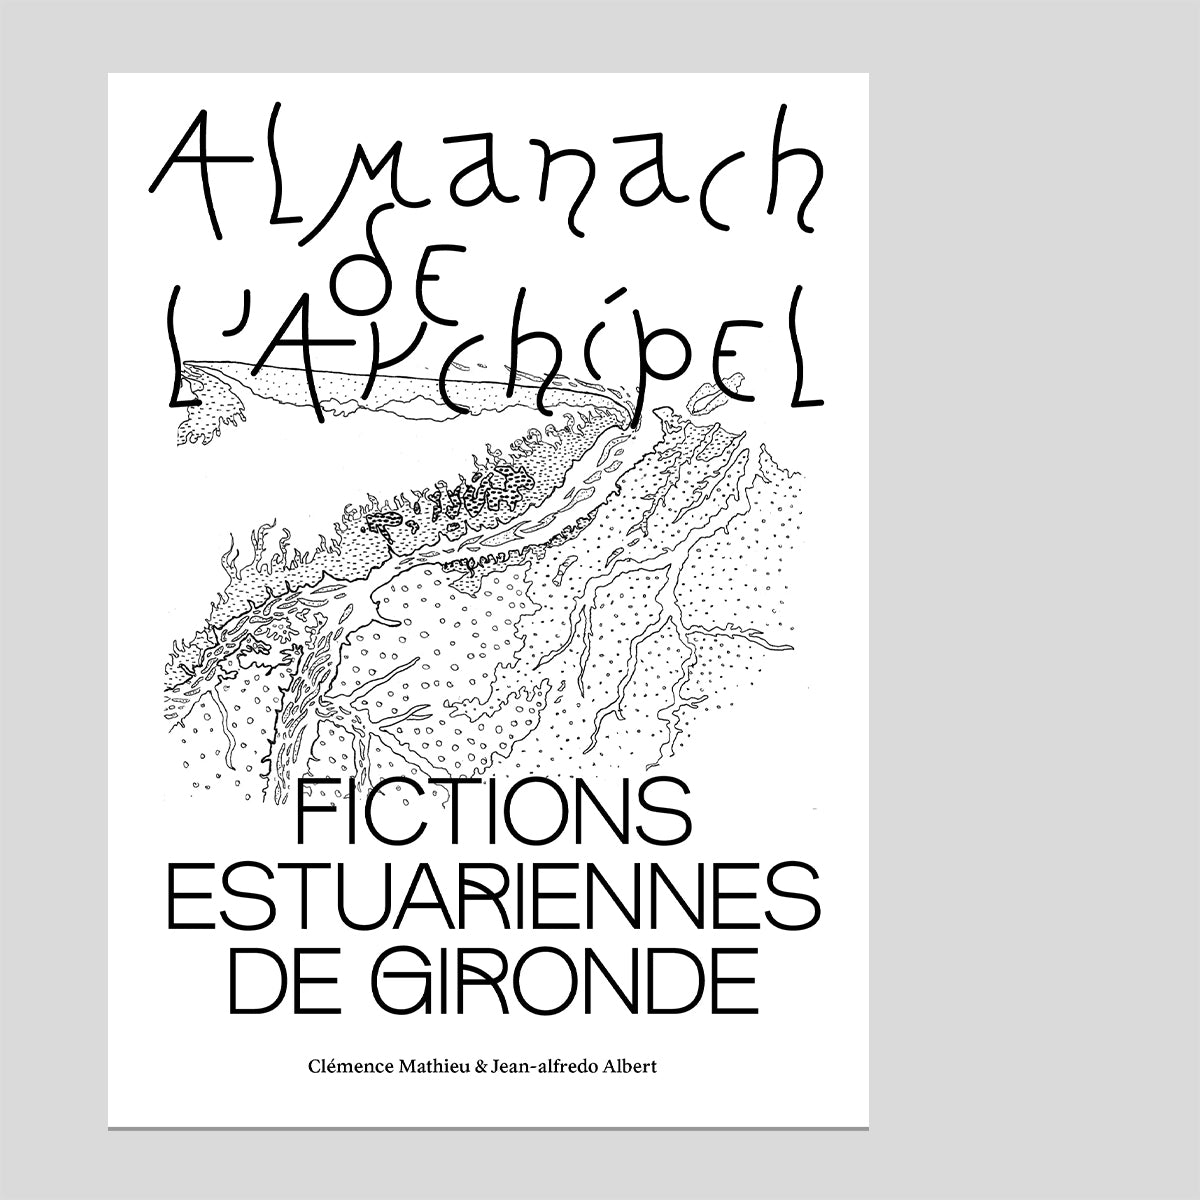 L’almanach de l’archipel - Clémence Mathieu & Jean-alfredo Albert